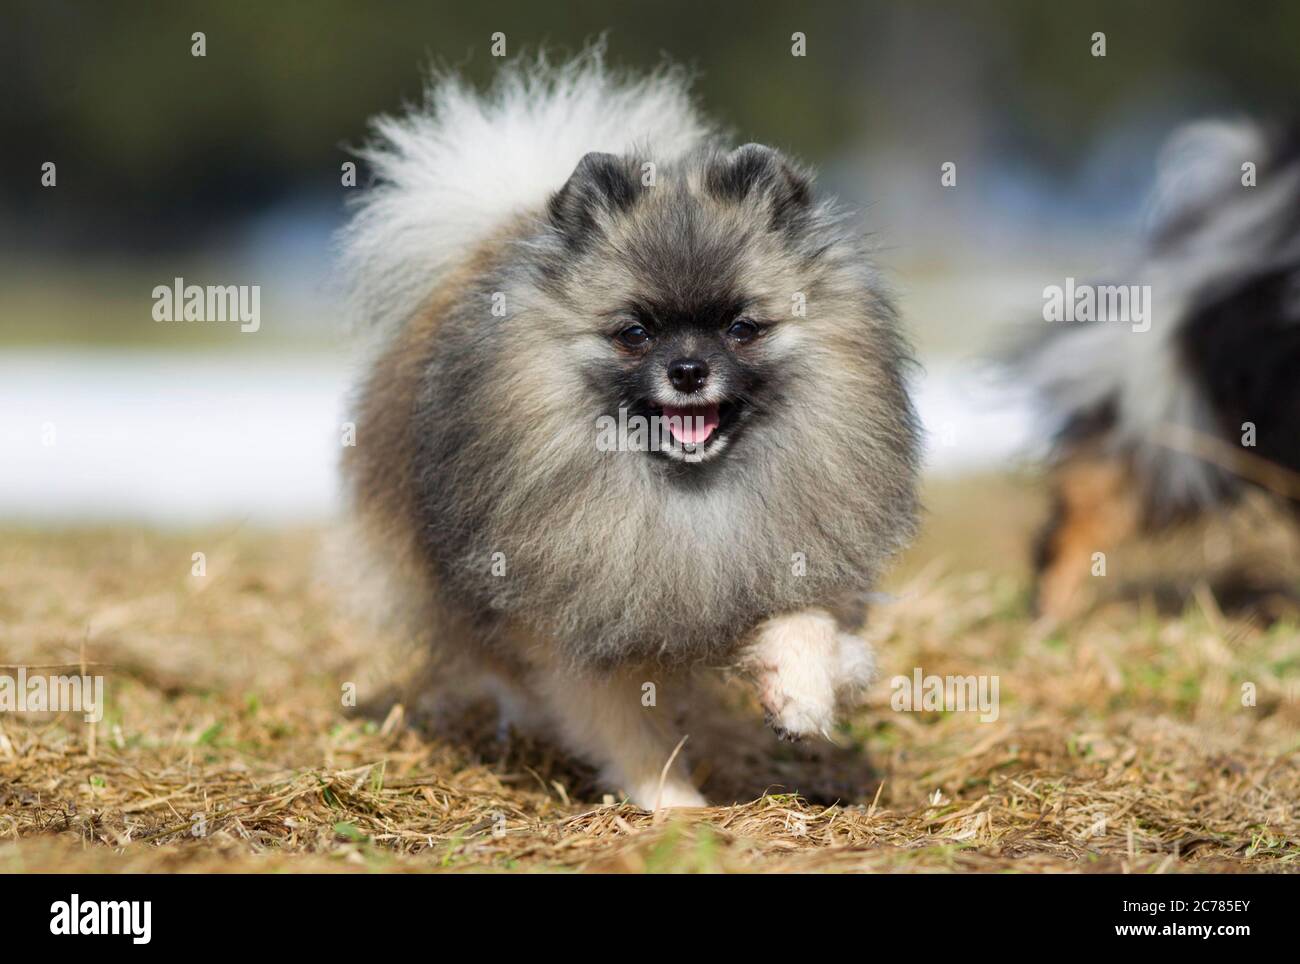 Pomeranian. Adult dog walking on grass. Germany Stock Photo